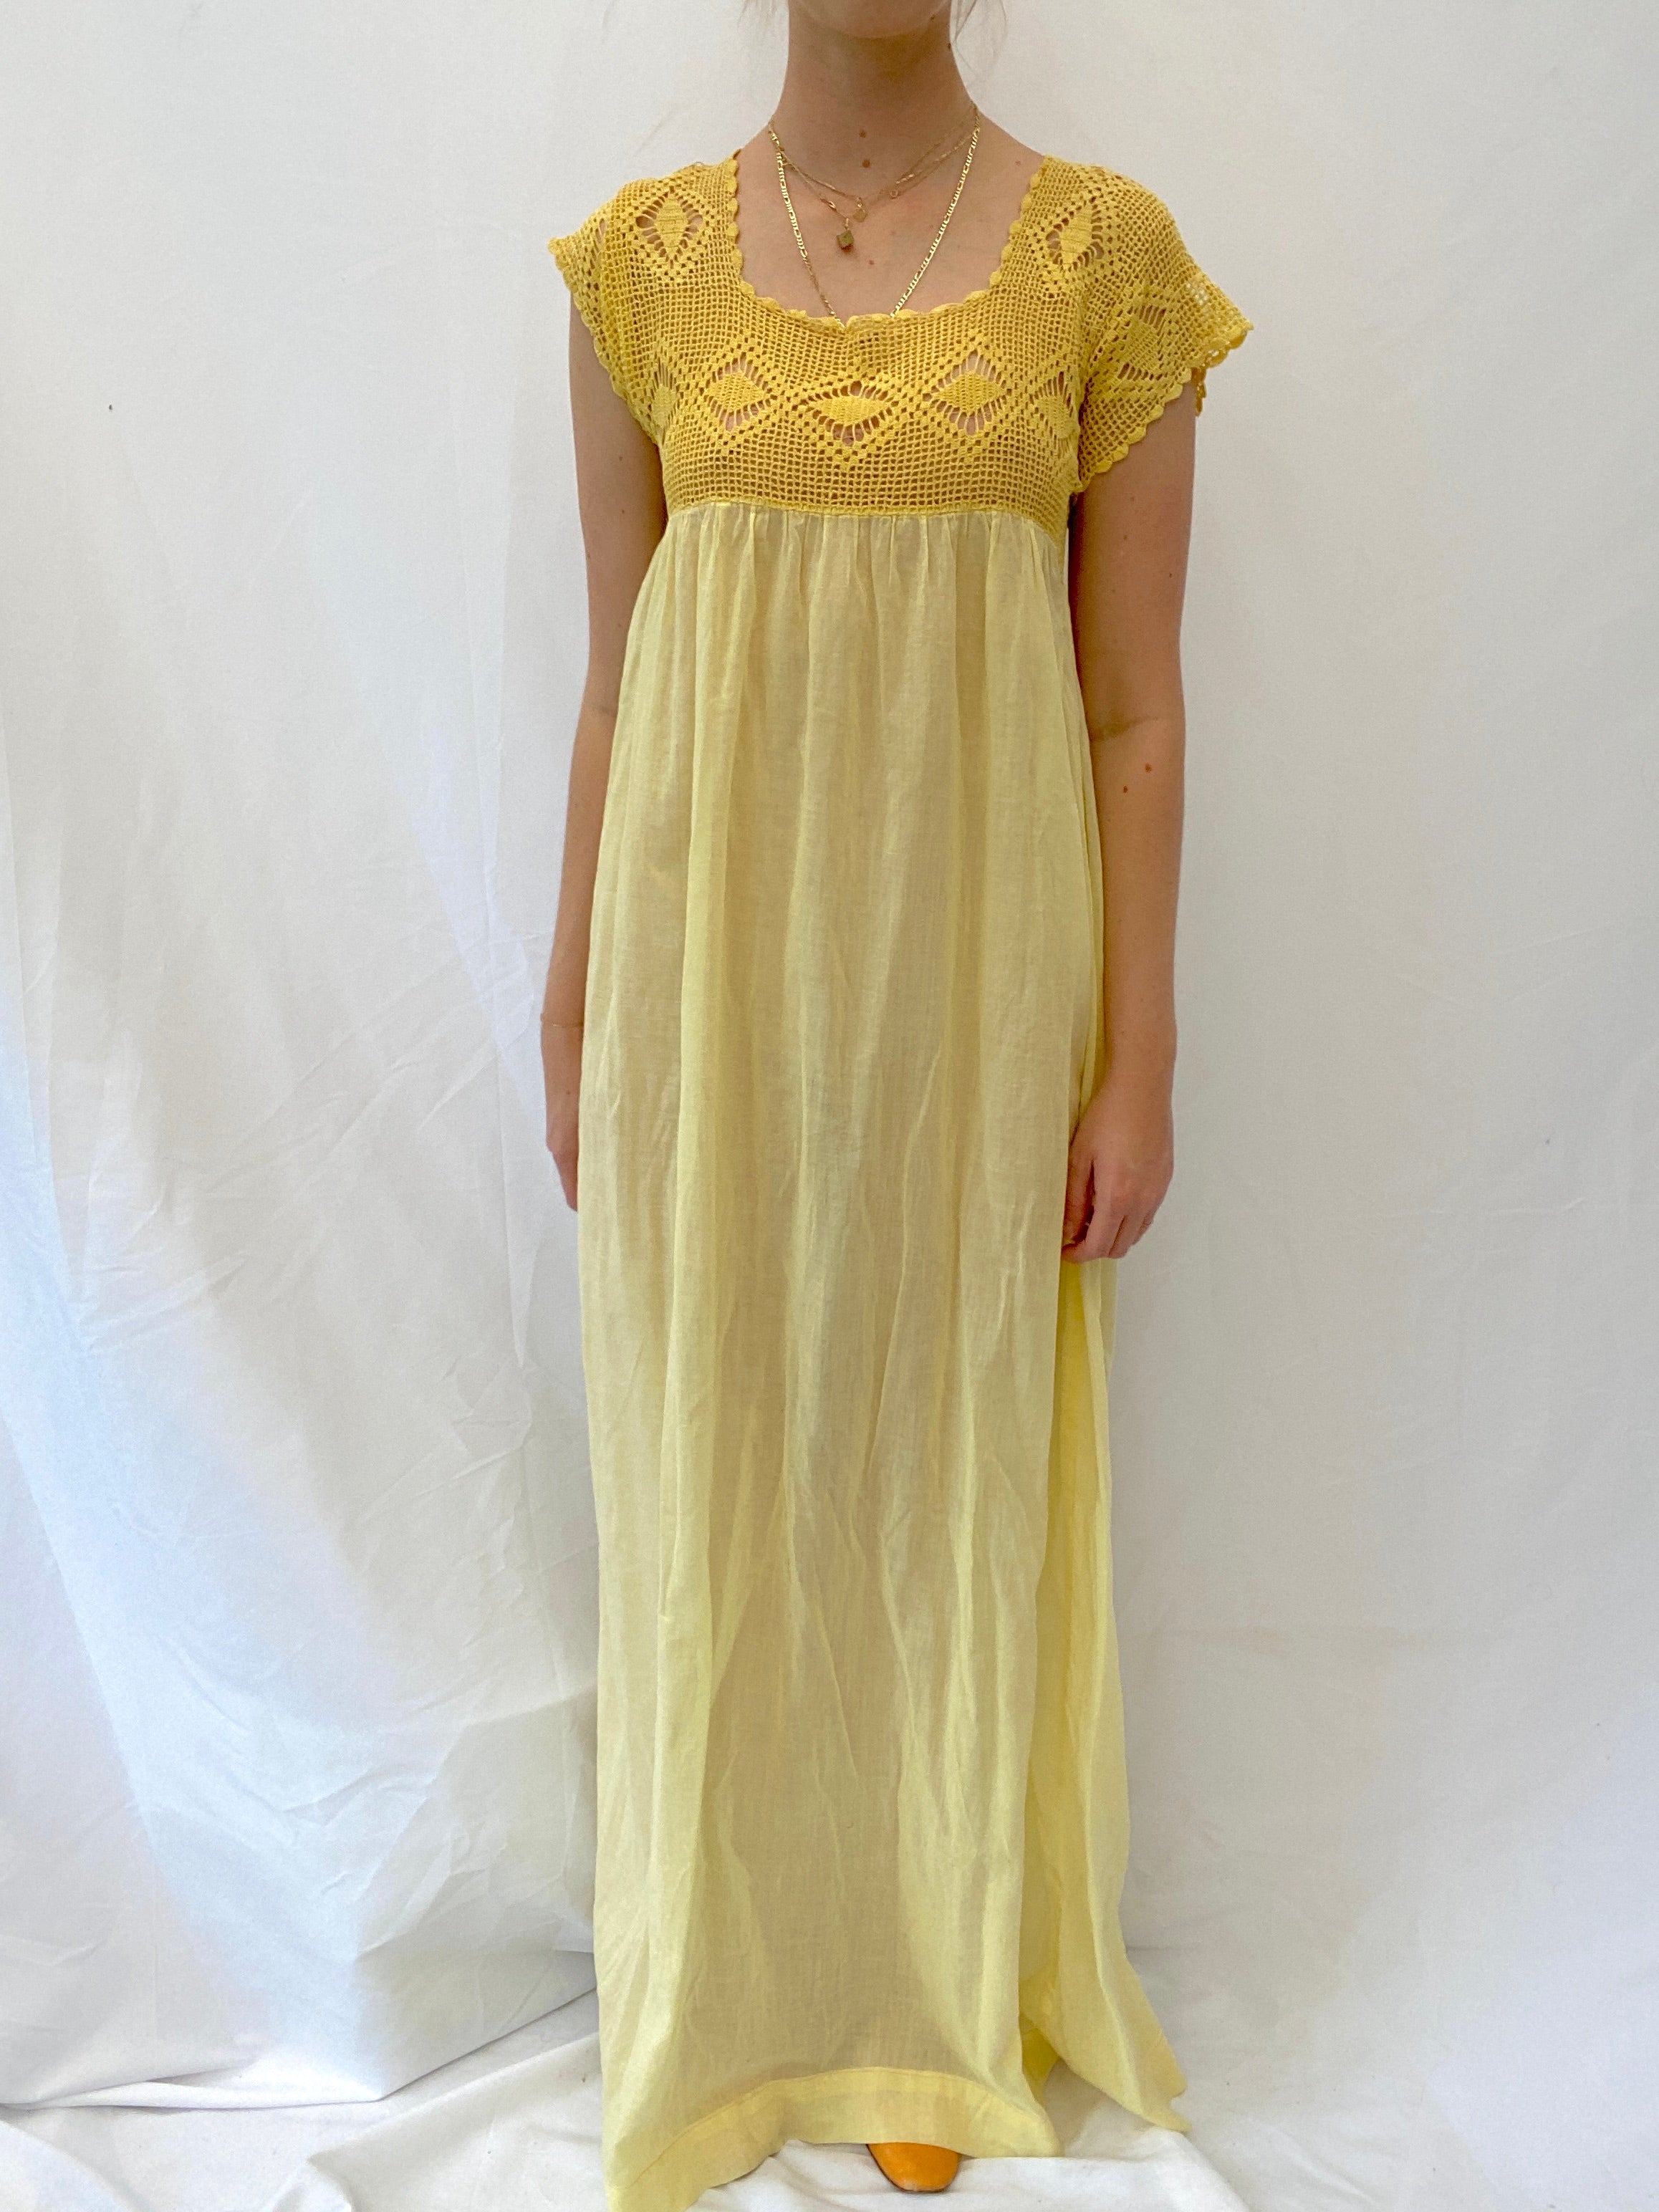 Sunflower Yellow Cotton Dress with Crochet Top